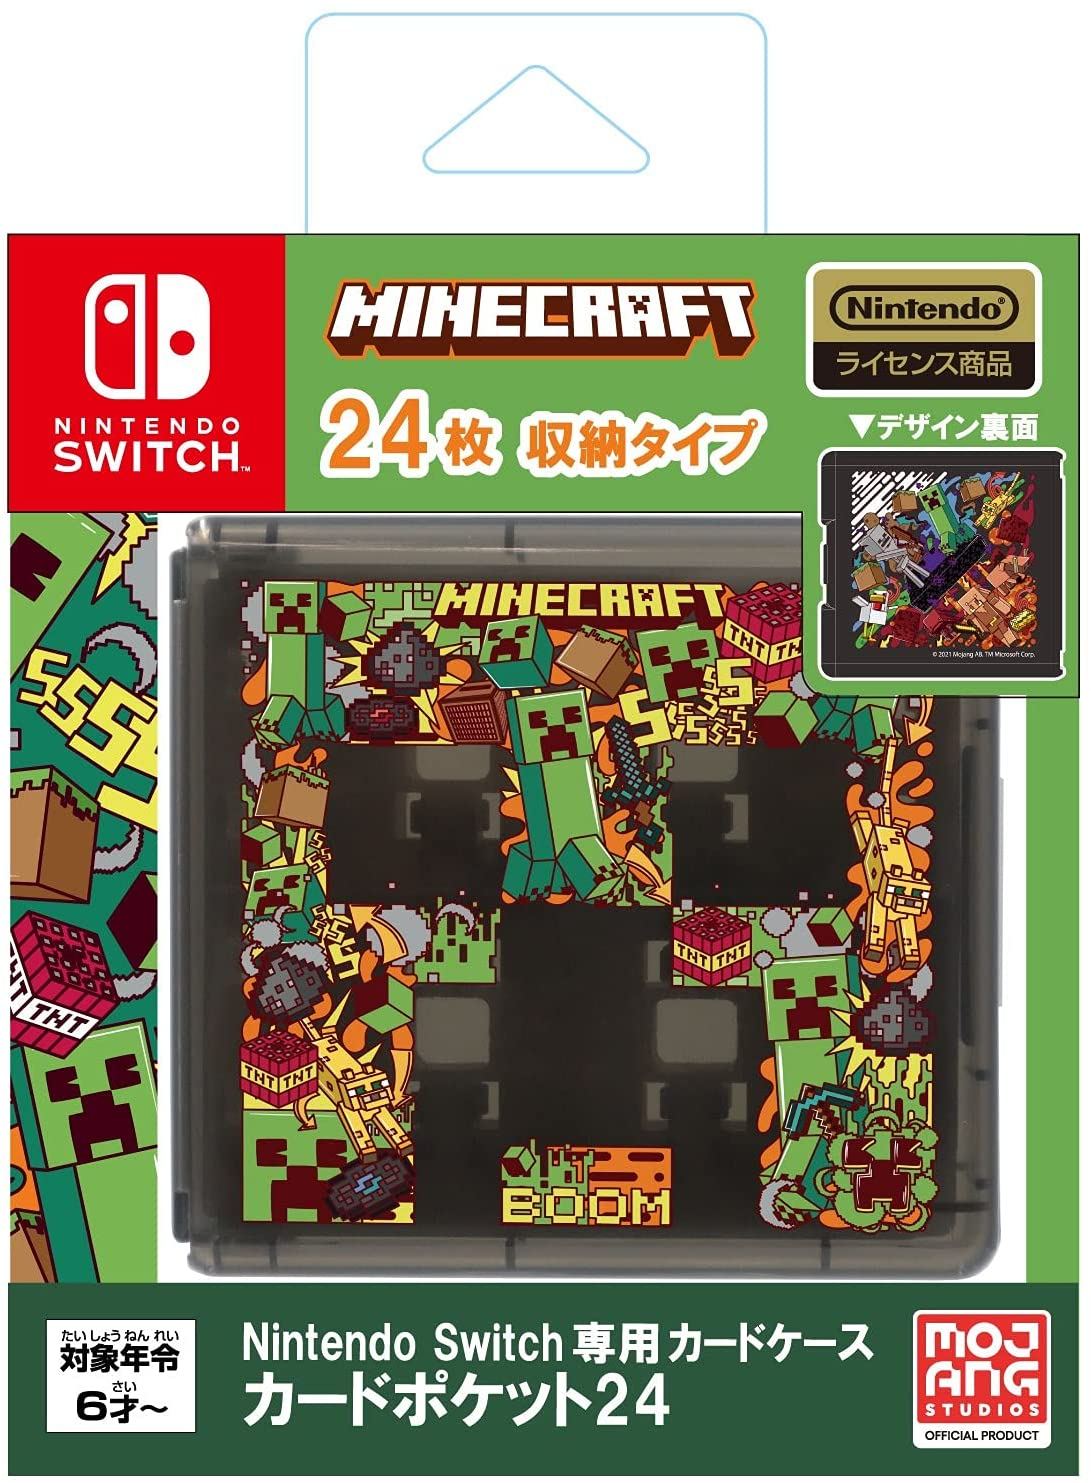 Nintendo Switch Card Pocket 24 (Minecraft)